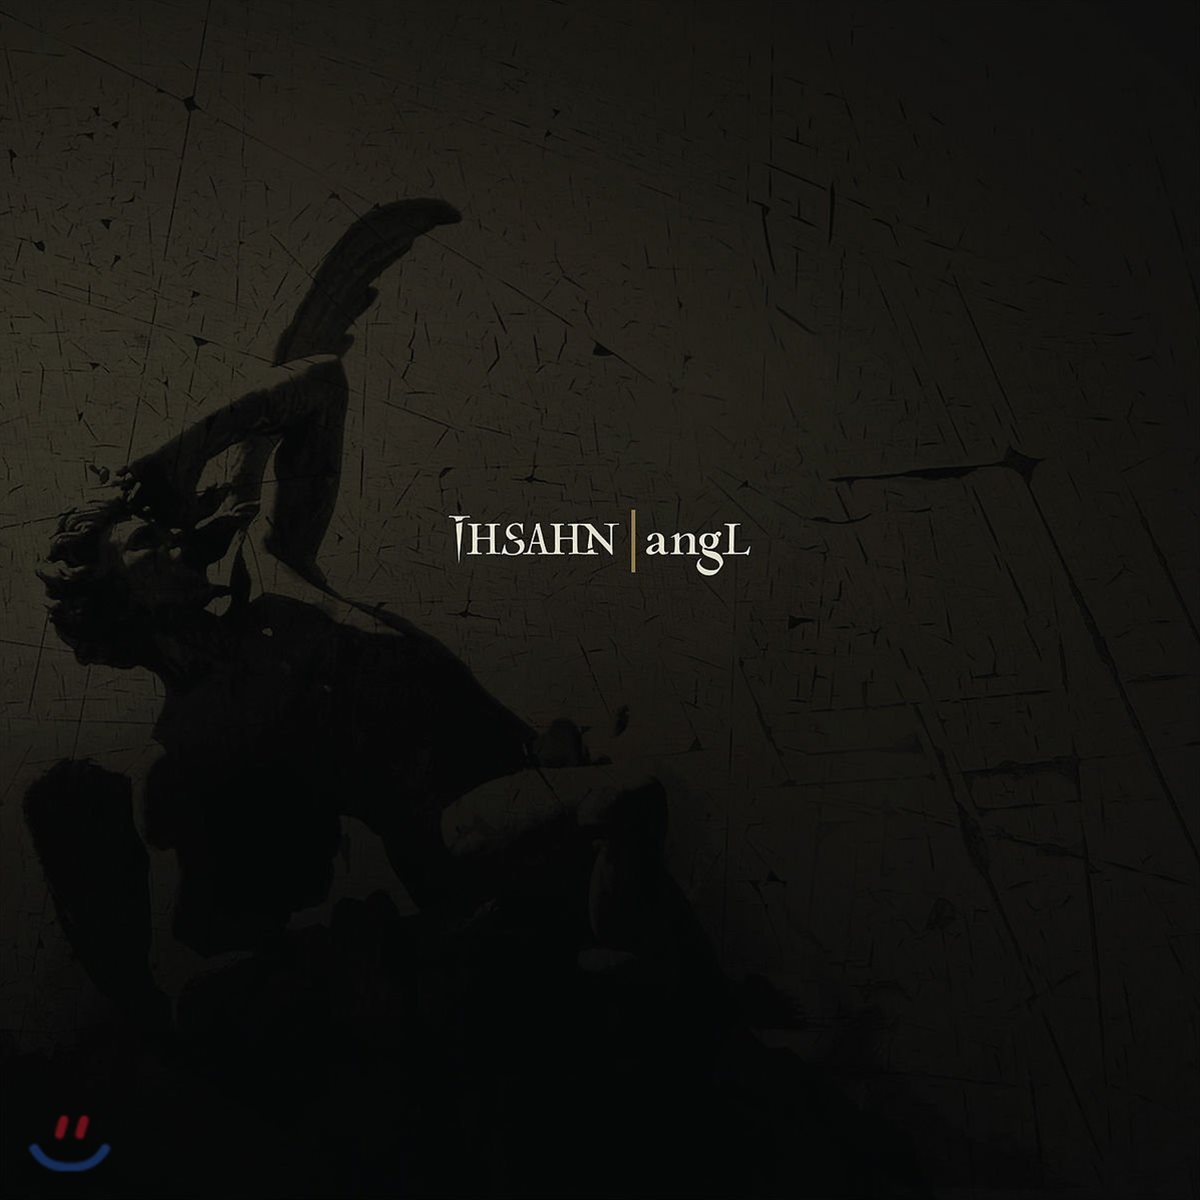 Ihsahn (이샨) - Angl [Reissue]